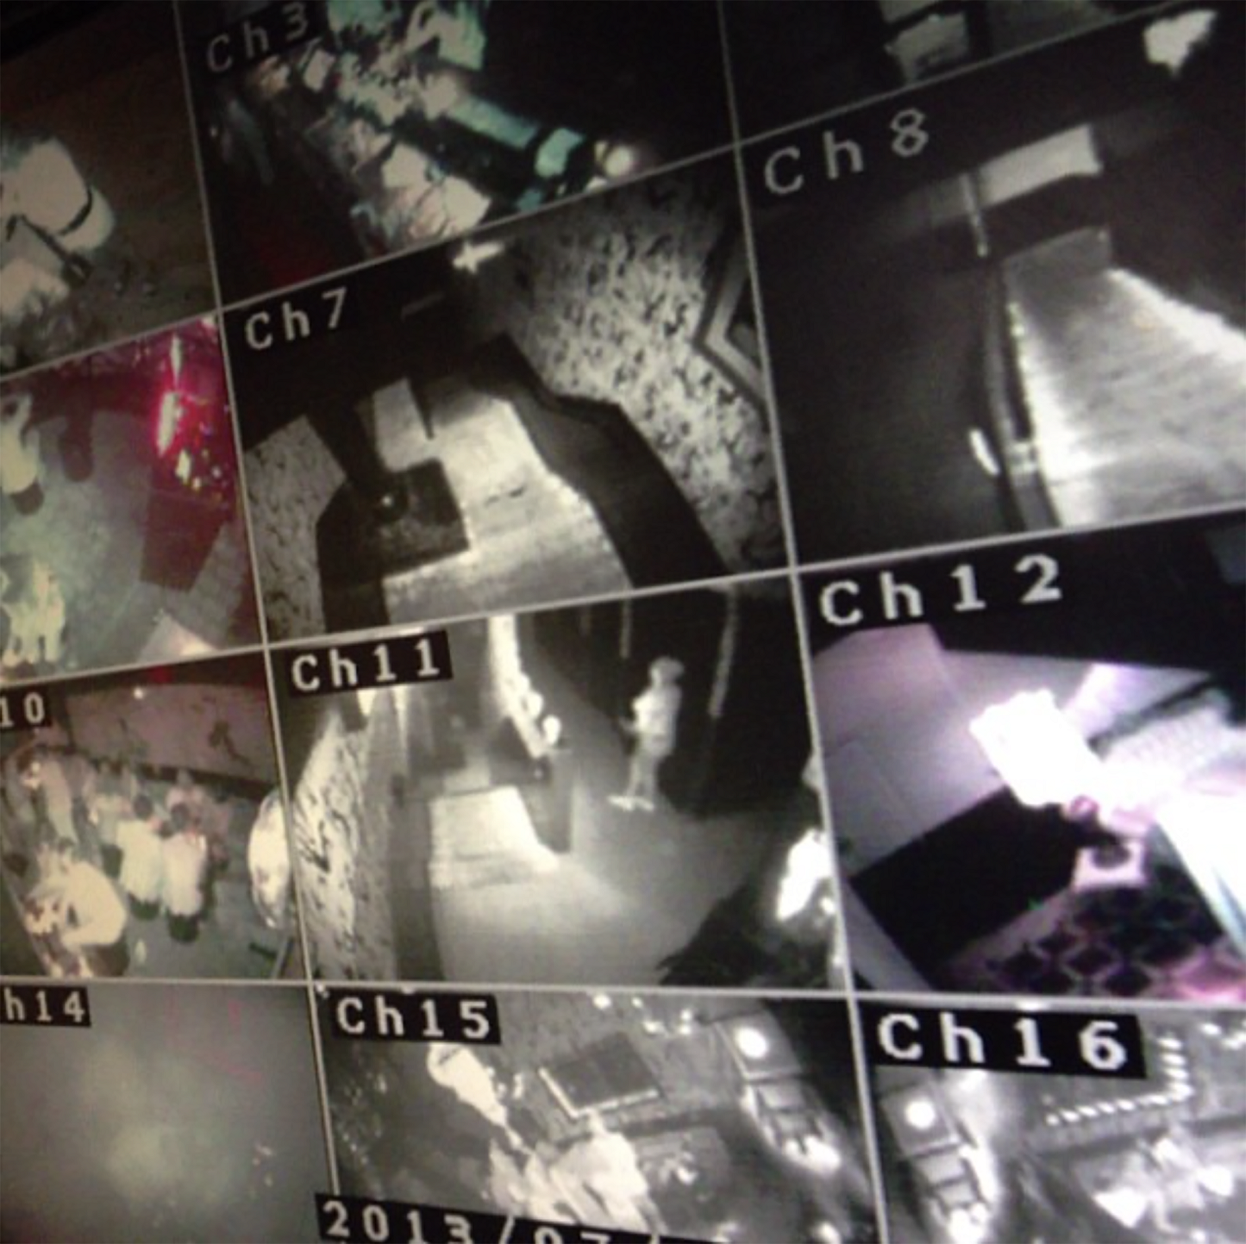 Chilling images of children from surveillance cameras on Jeffrey Epstein’s pedo island